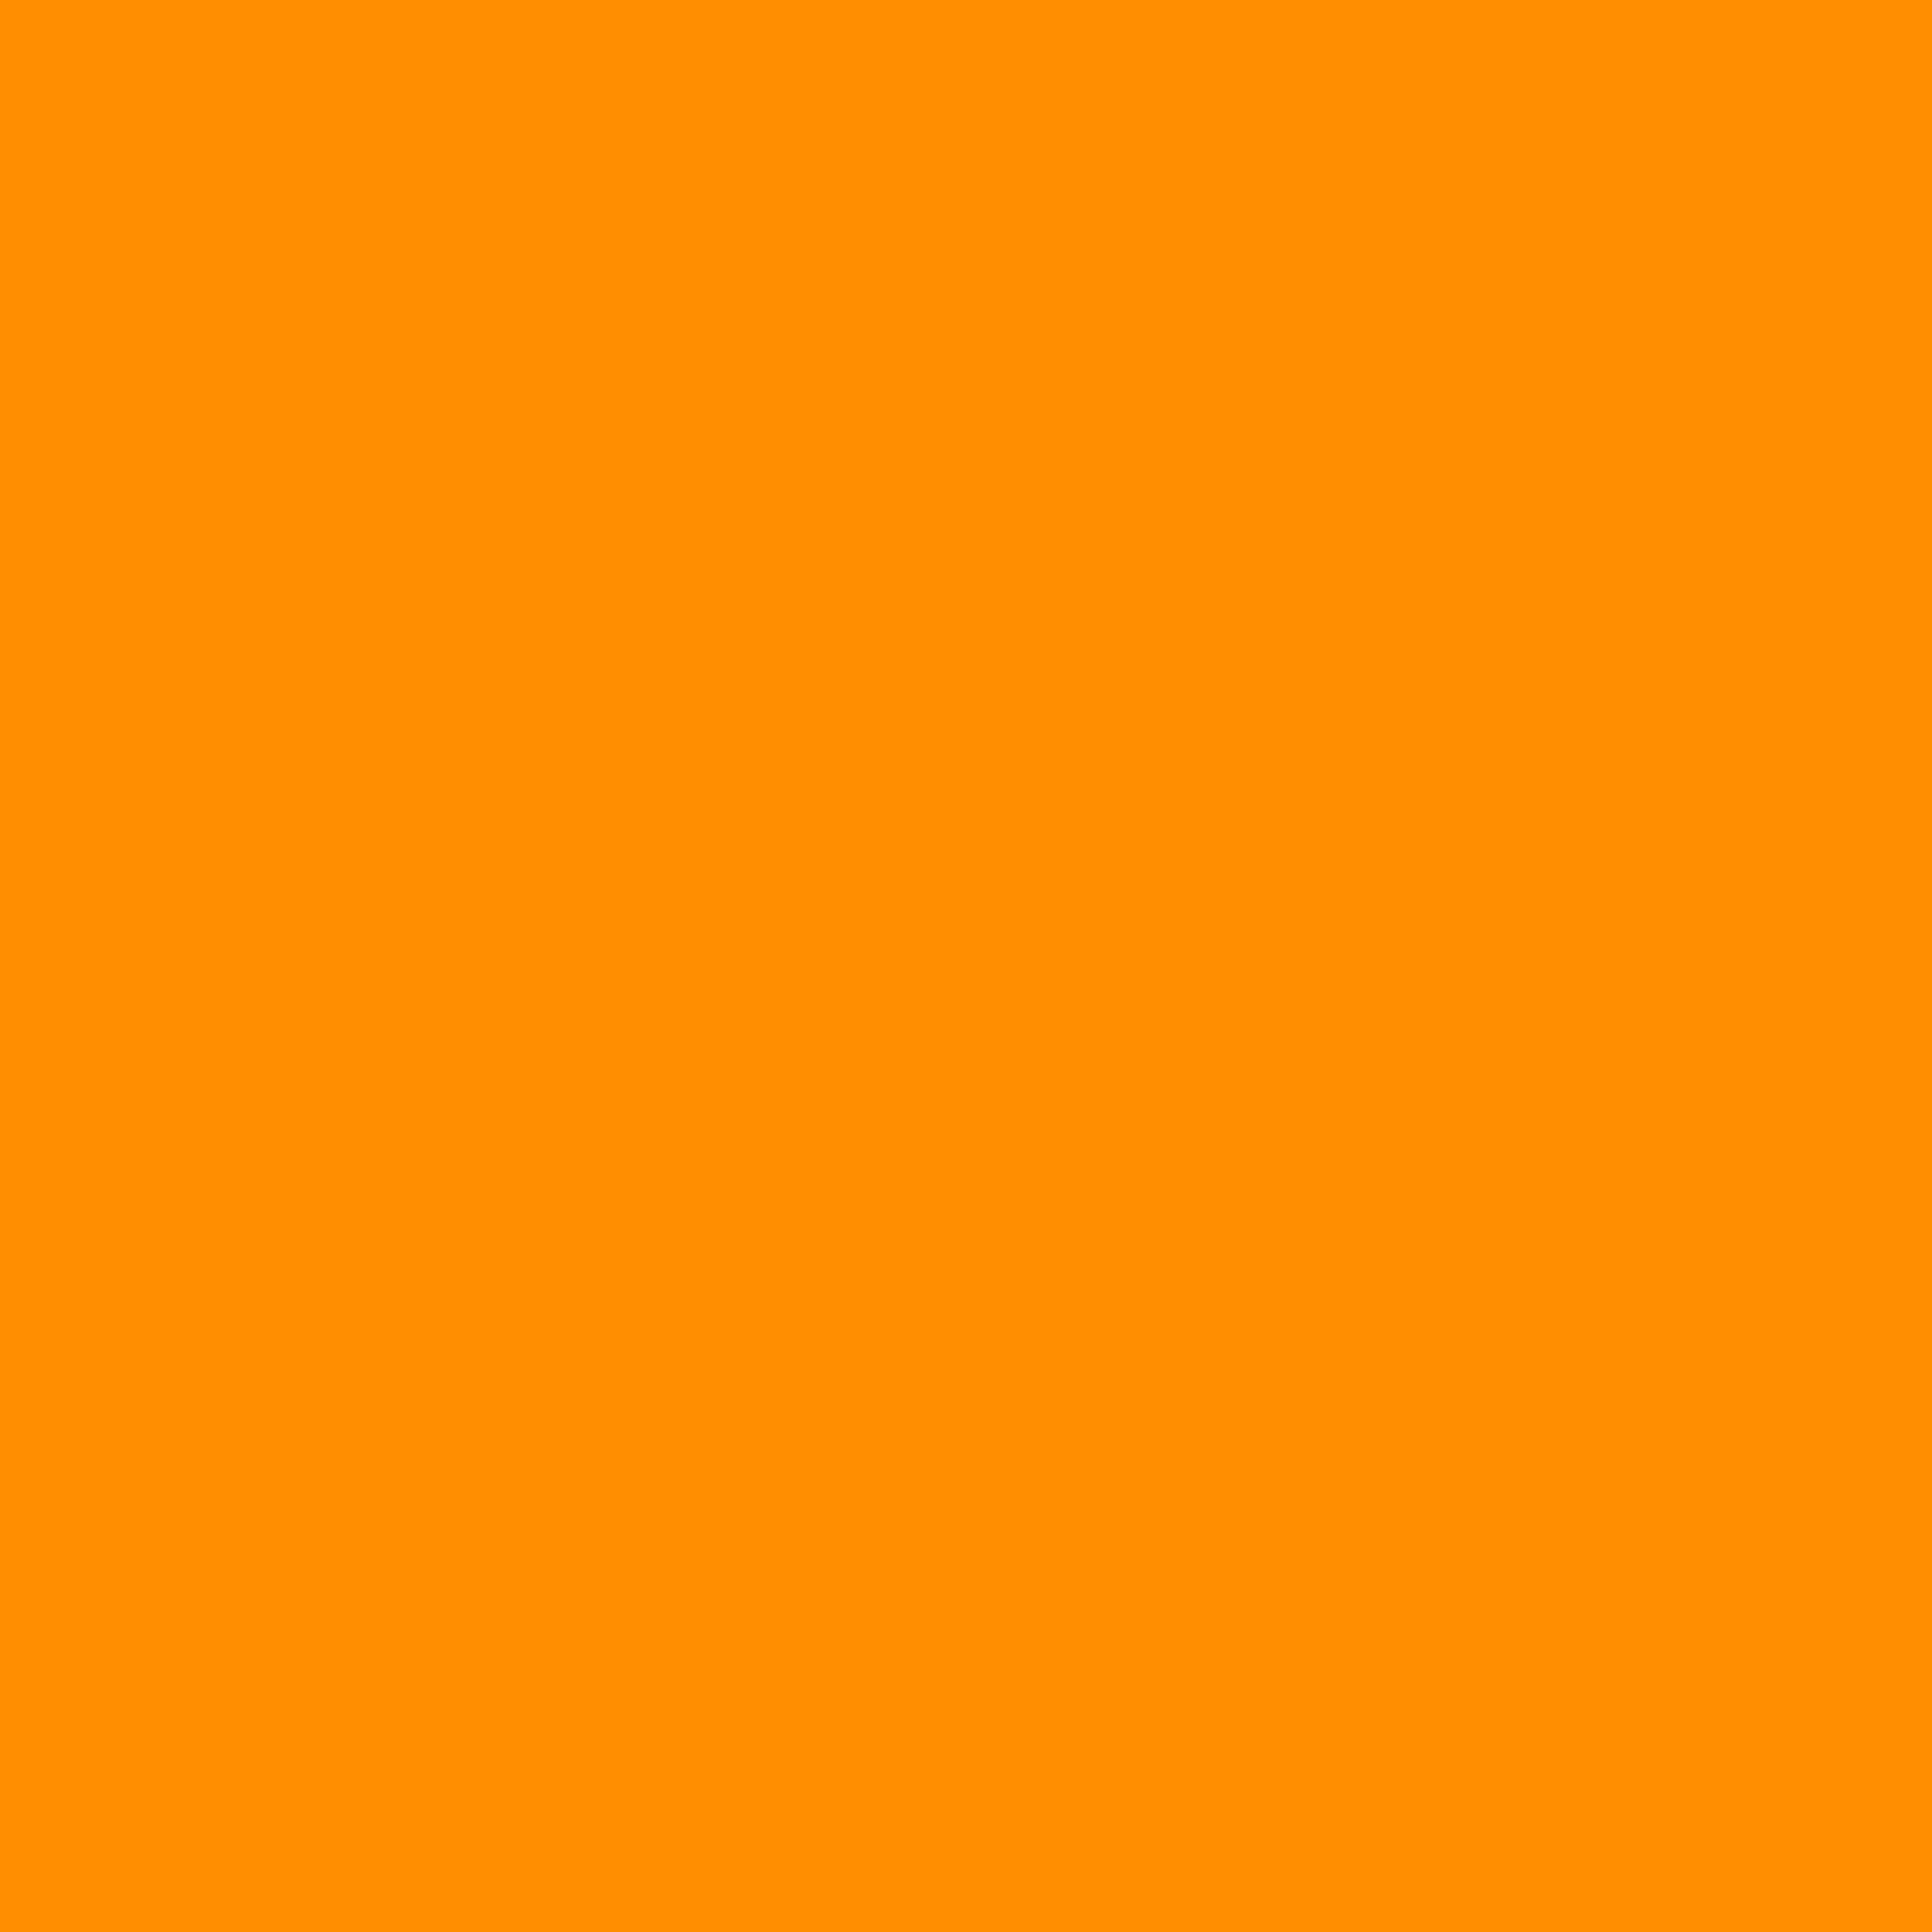 2732x2732 Princeton Orange Solid Color Background